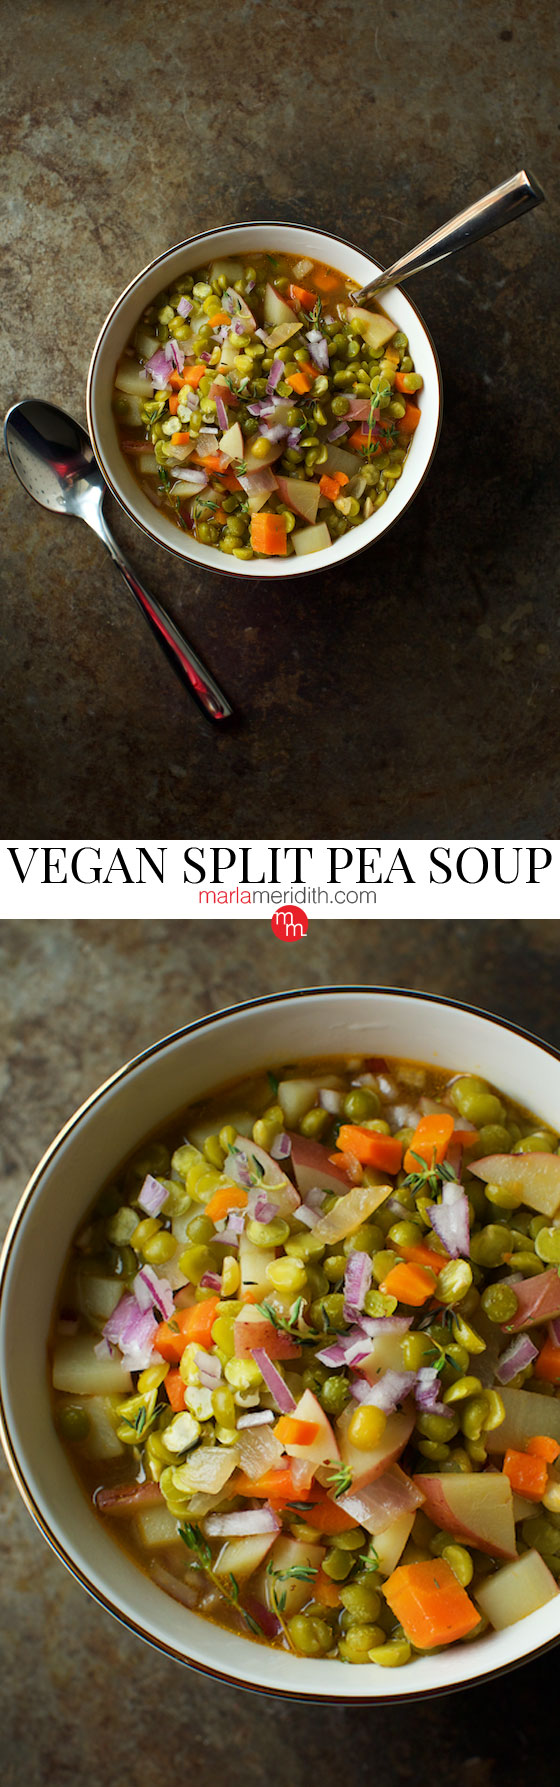 Vegan Split Pea Soup recipe | MarlaMeridith.com ( @marlameridith )